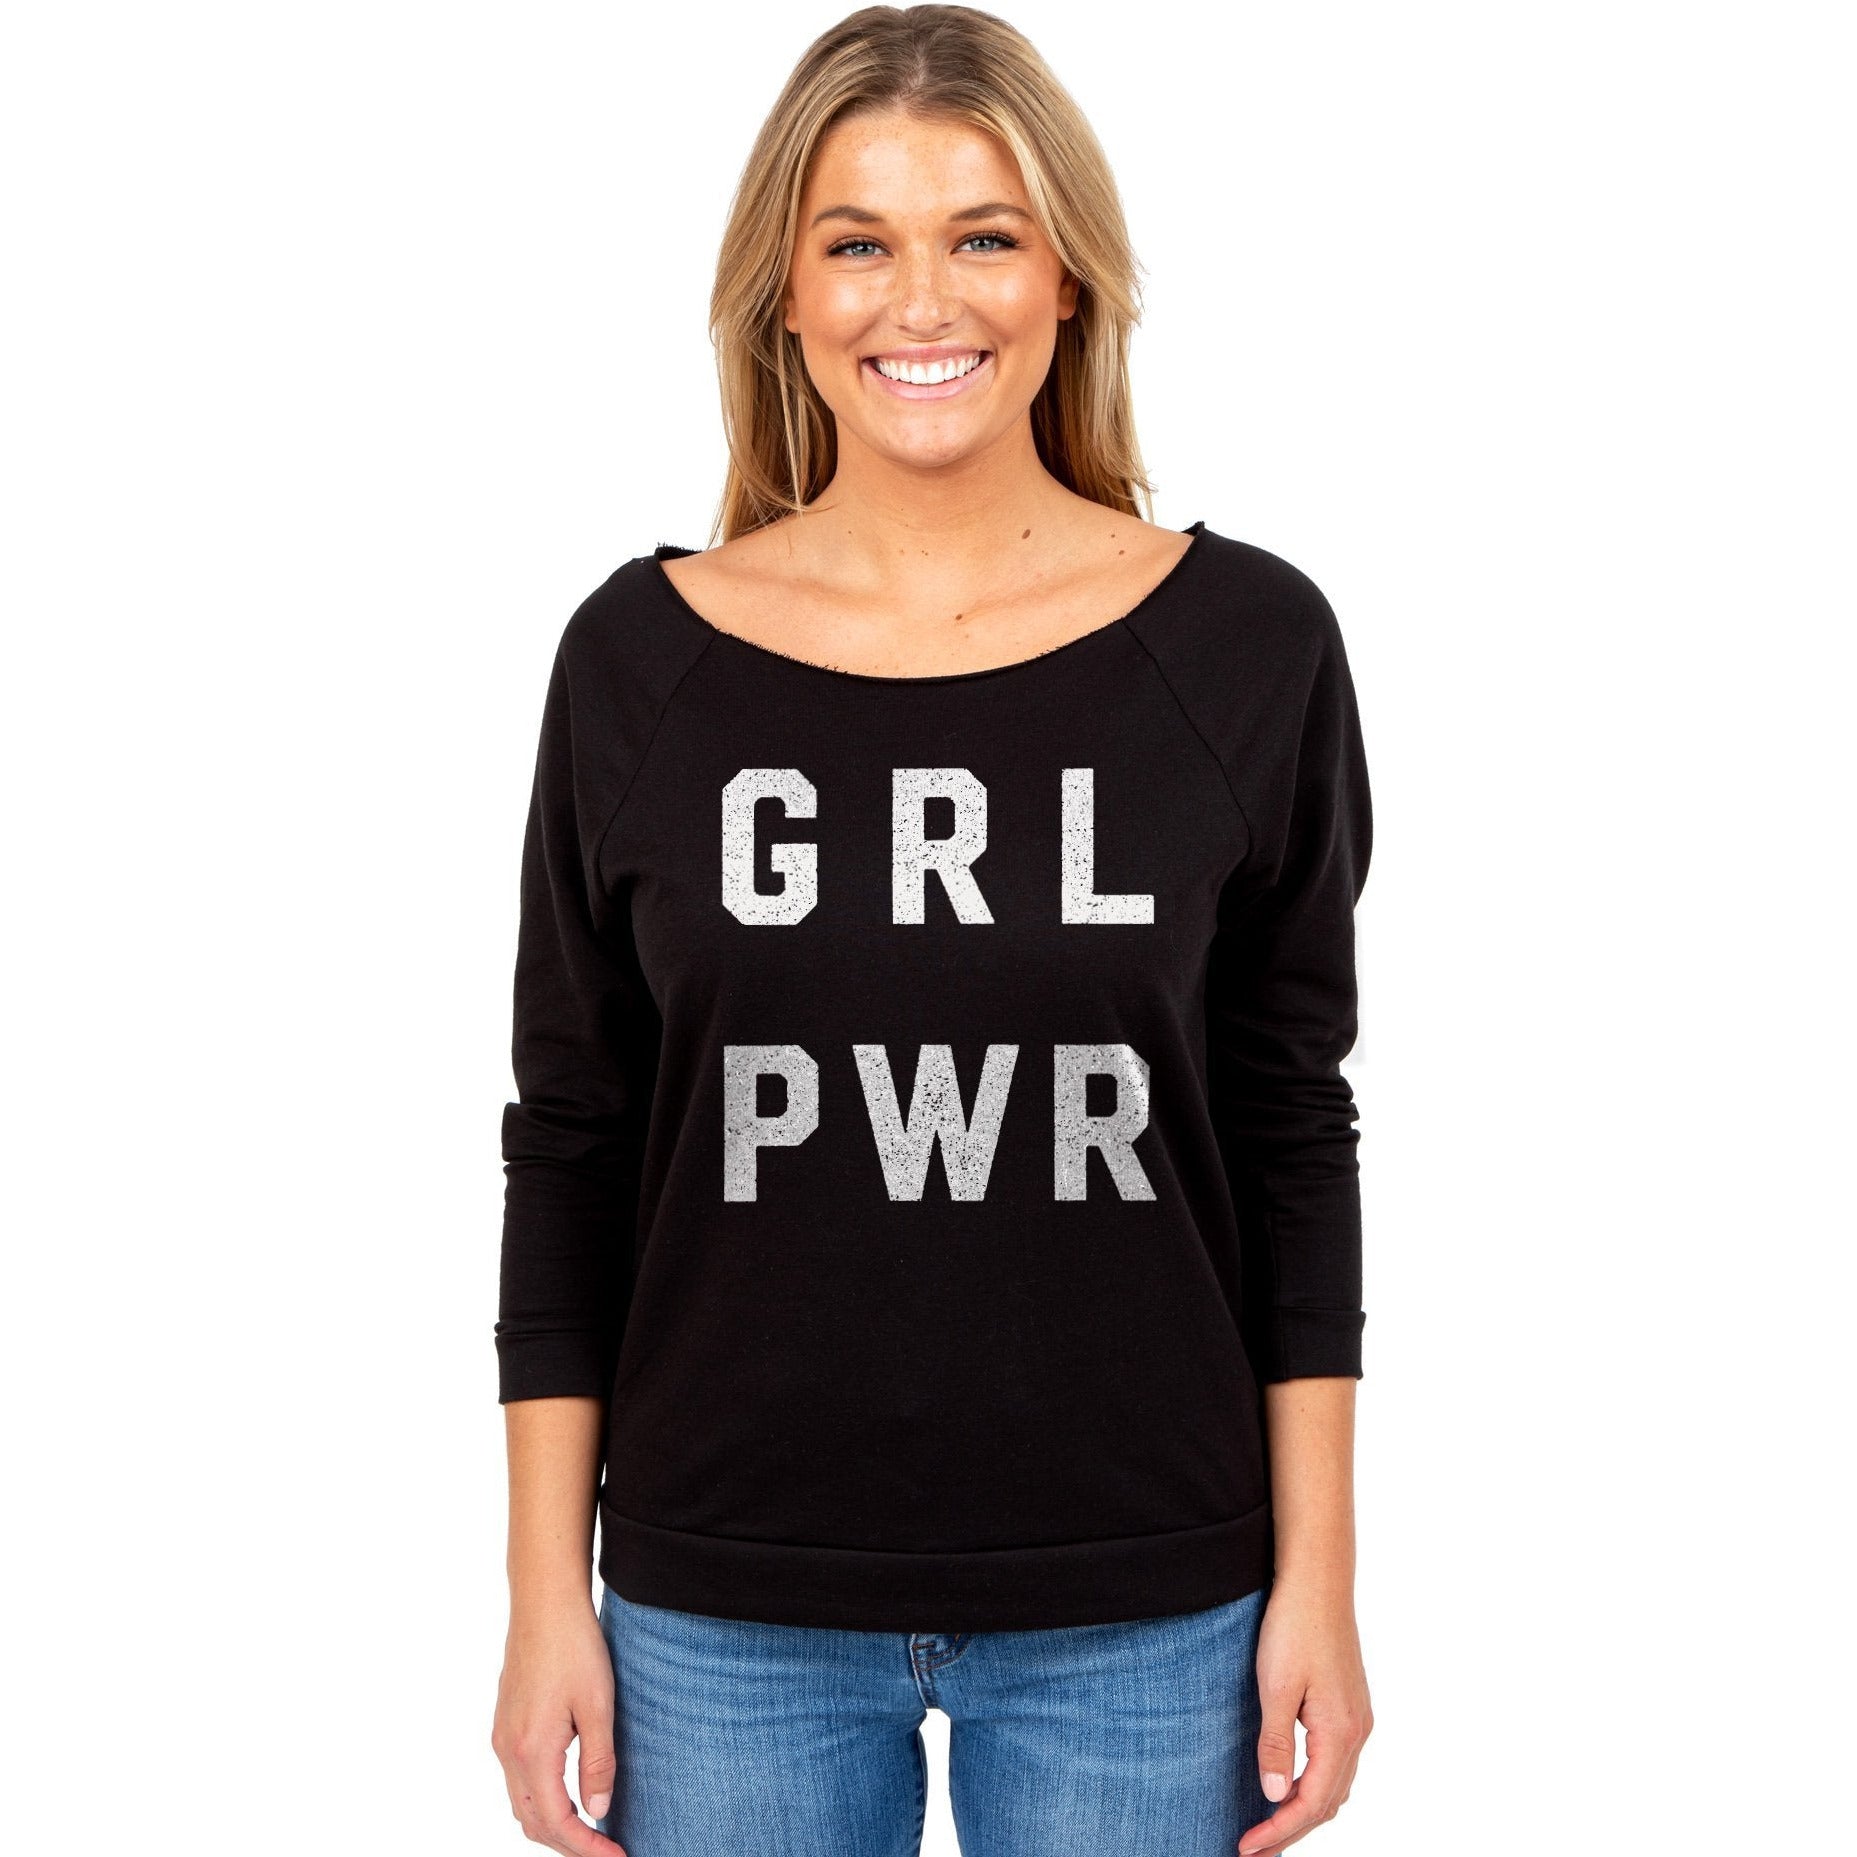 GRL PWR Girl Power Women's Graphic Printed Lightweight Slouchy 3/4 Sleeves Sweatshirt Black Model